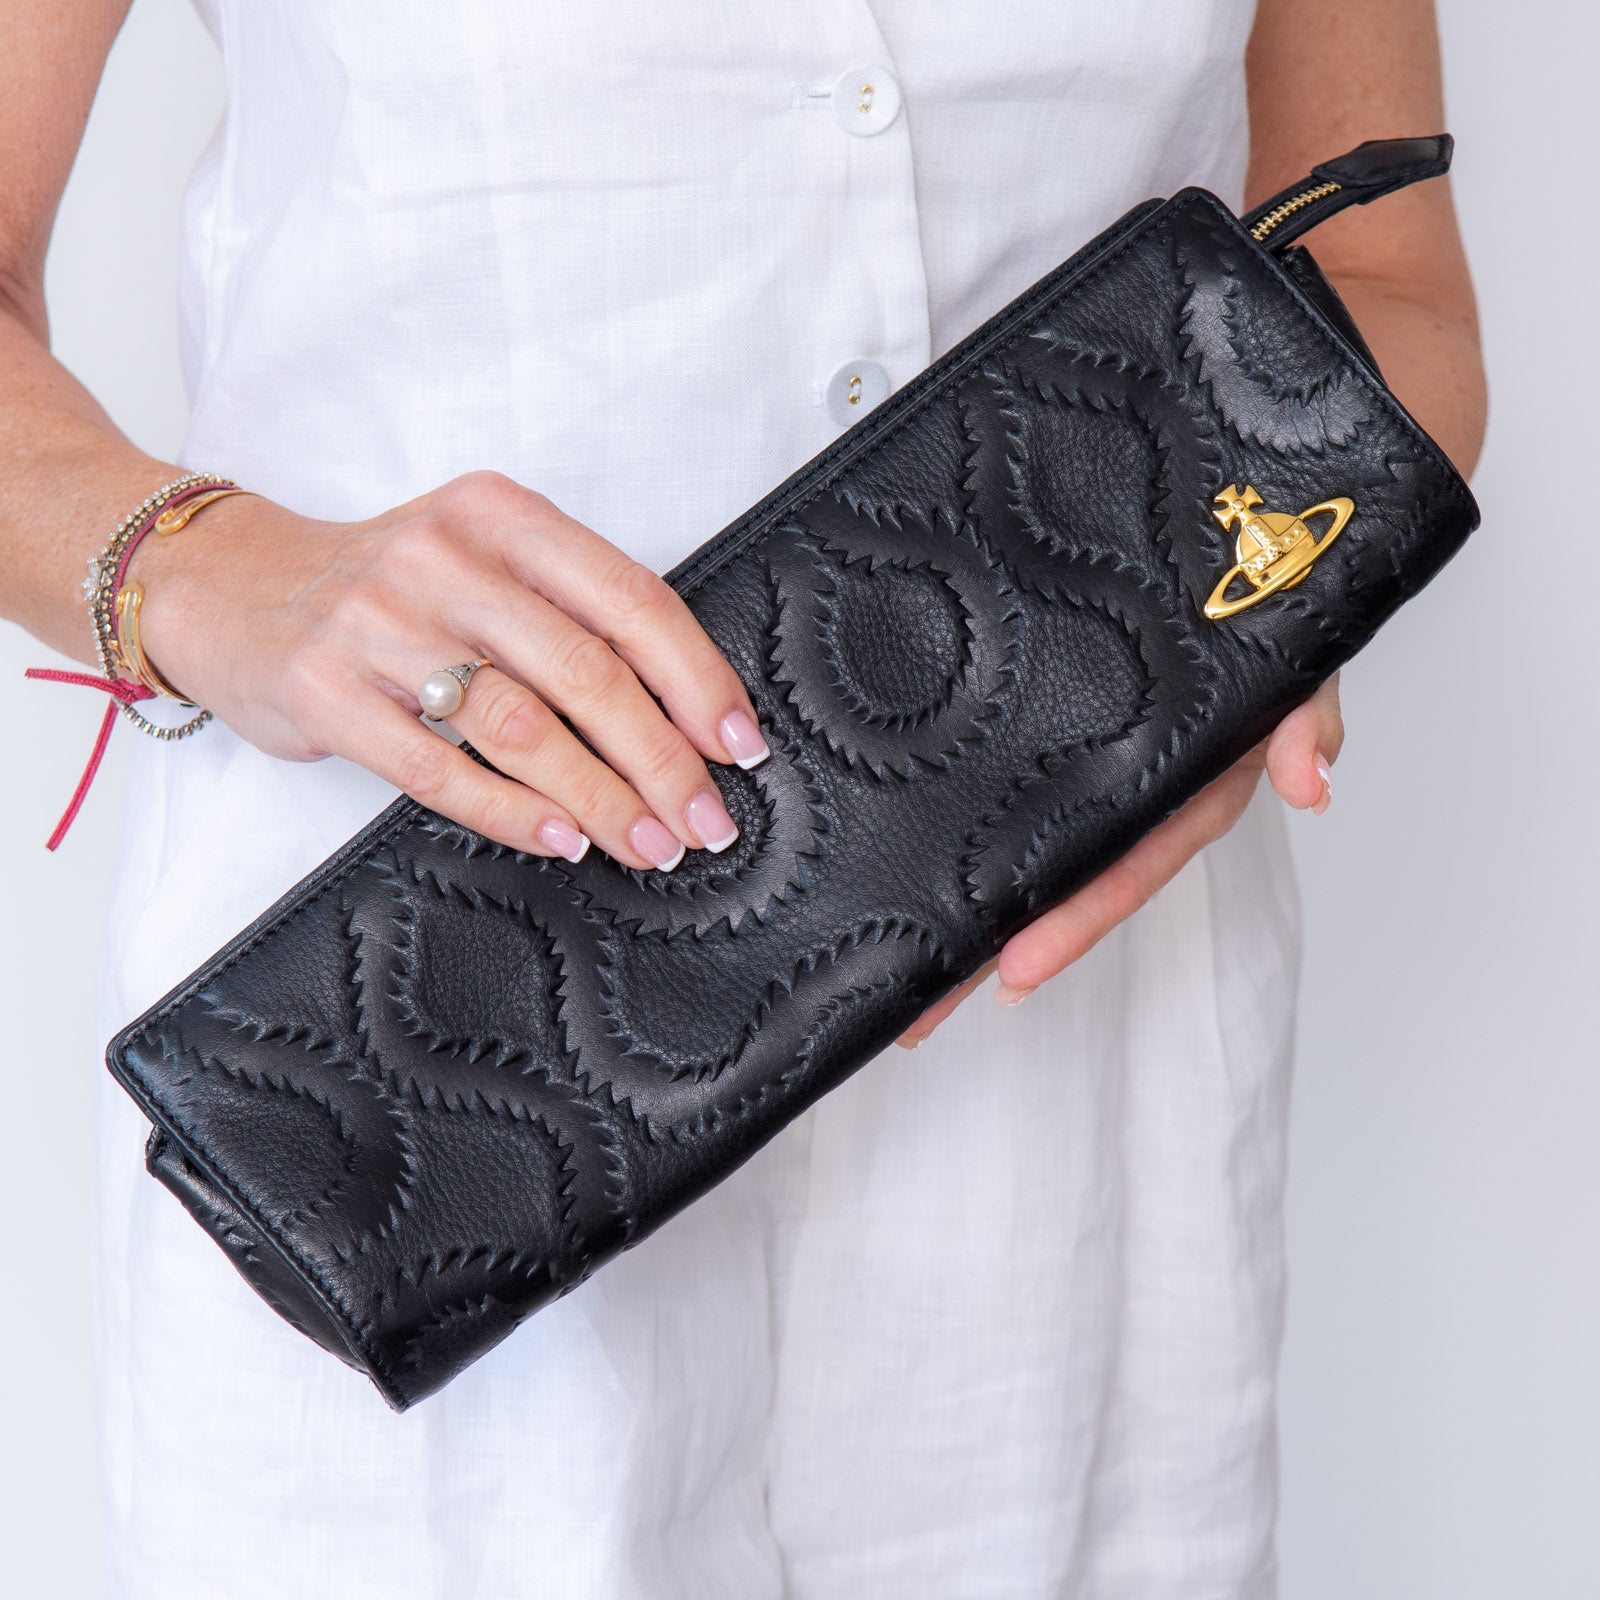 Vivienne Westwood Authenticated Handbag